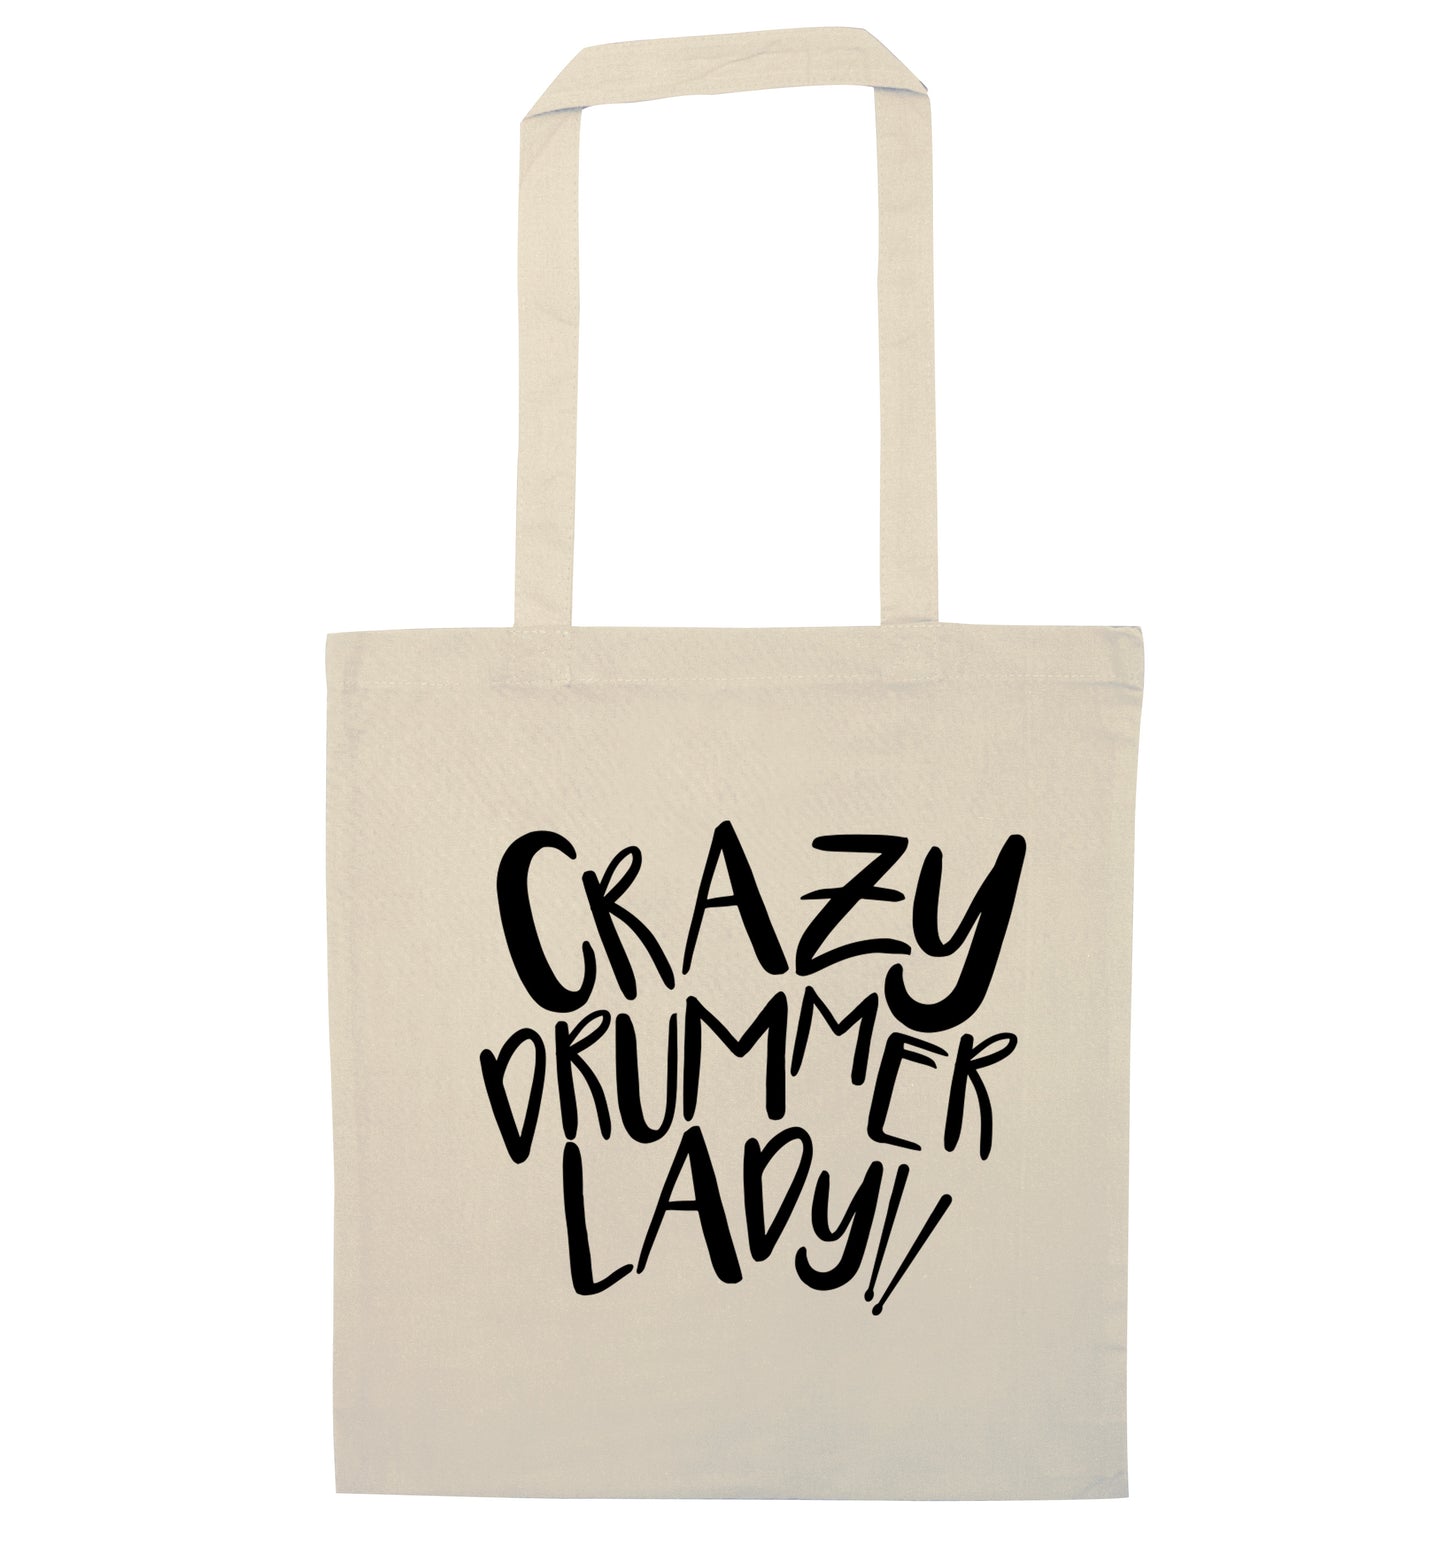 Crazy drummer lady natural tote bag